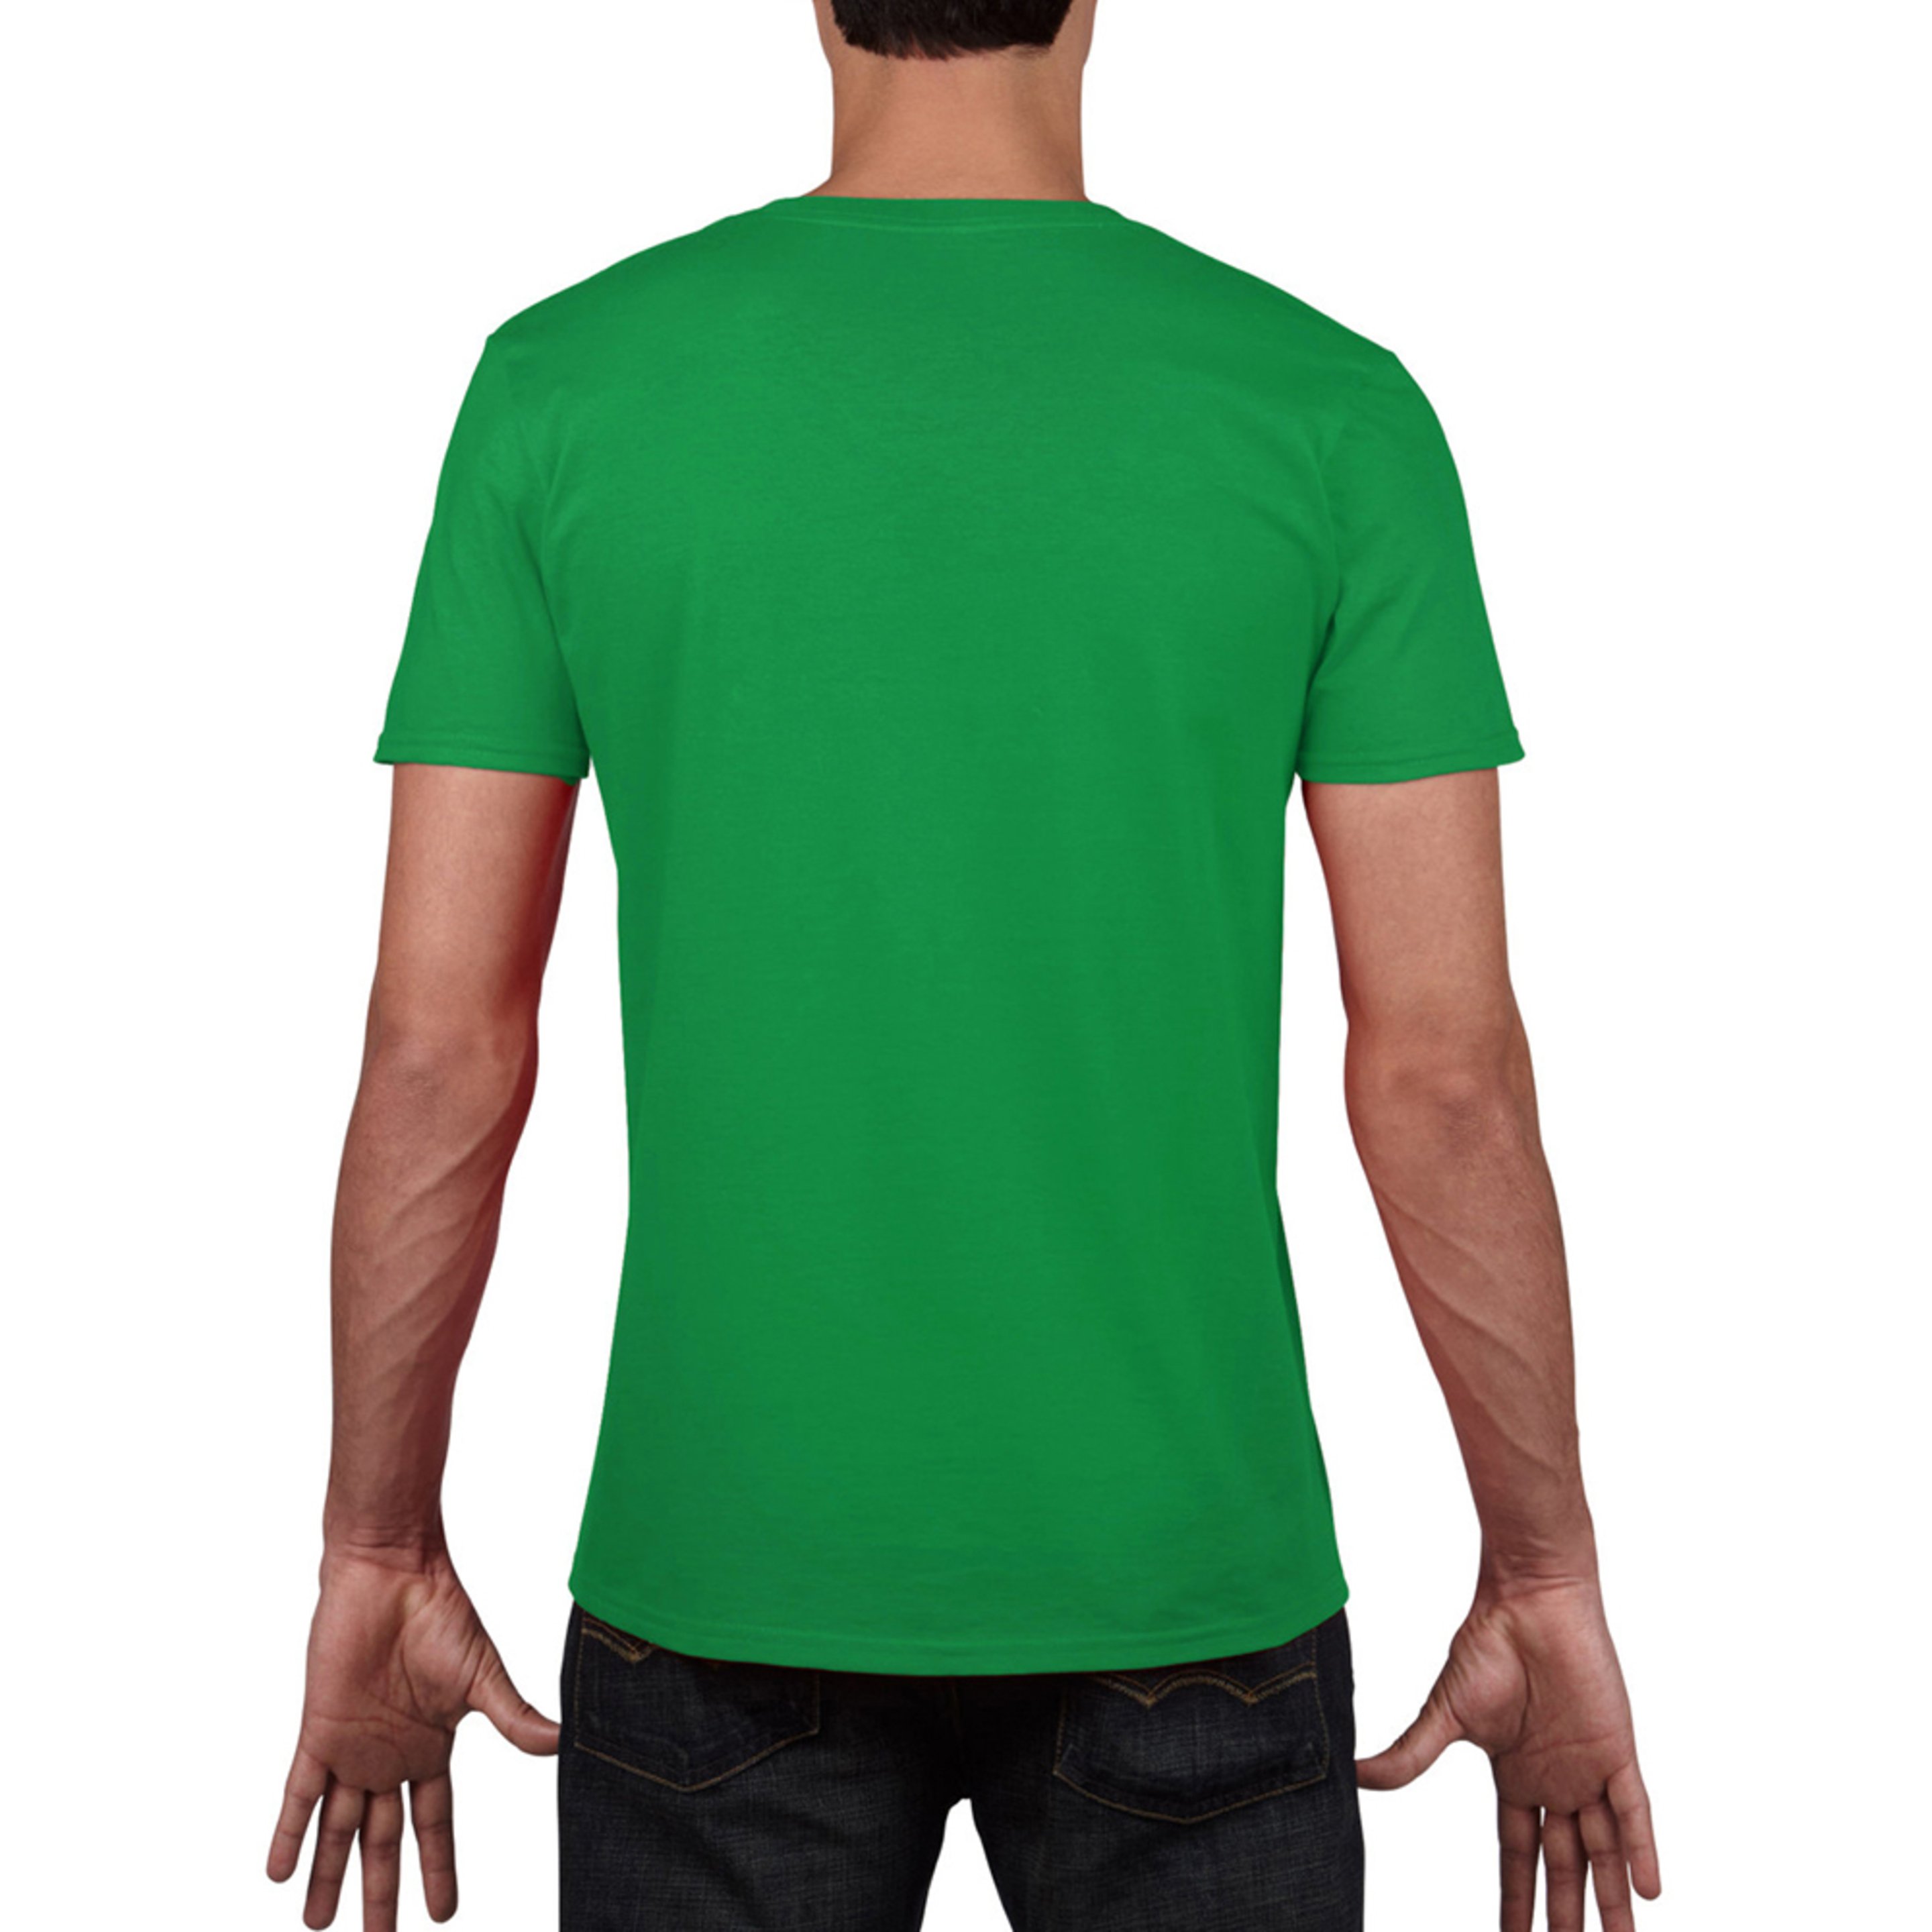 T-shirt Gildan Soft Style